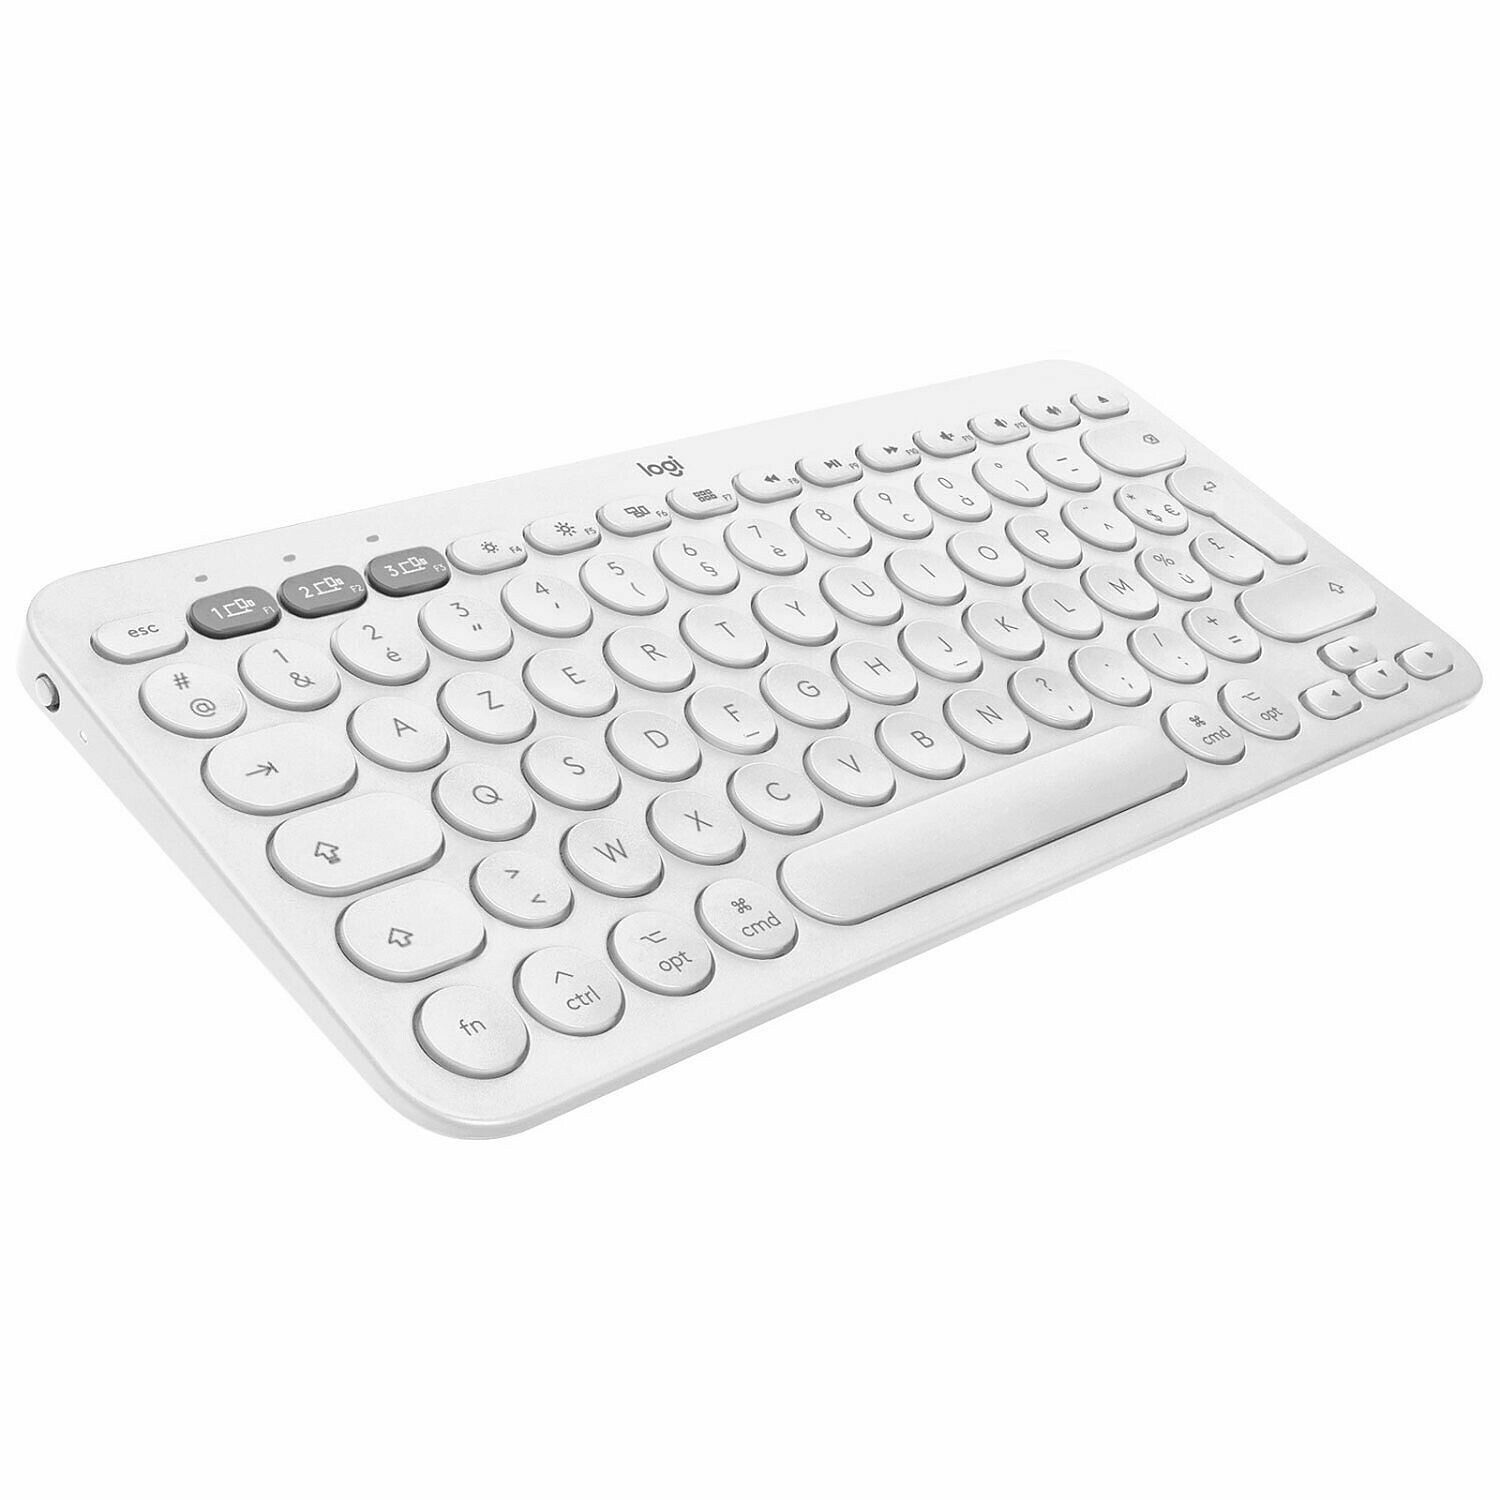 Logitech K380 Multi-Device Bluetooth Keyboard for Mac (Blanc) (image:2)